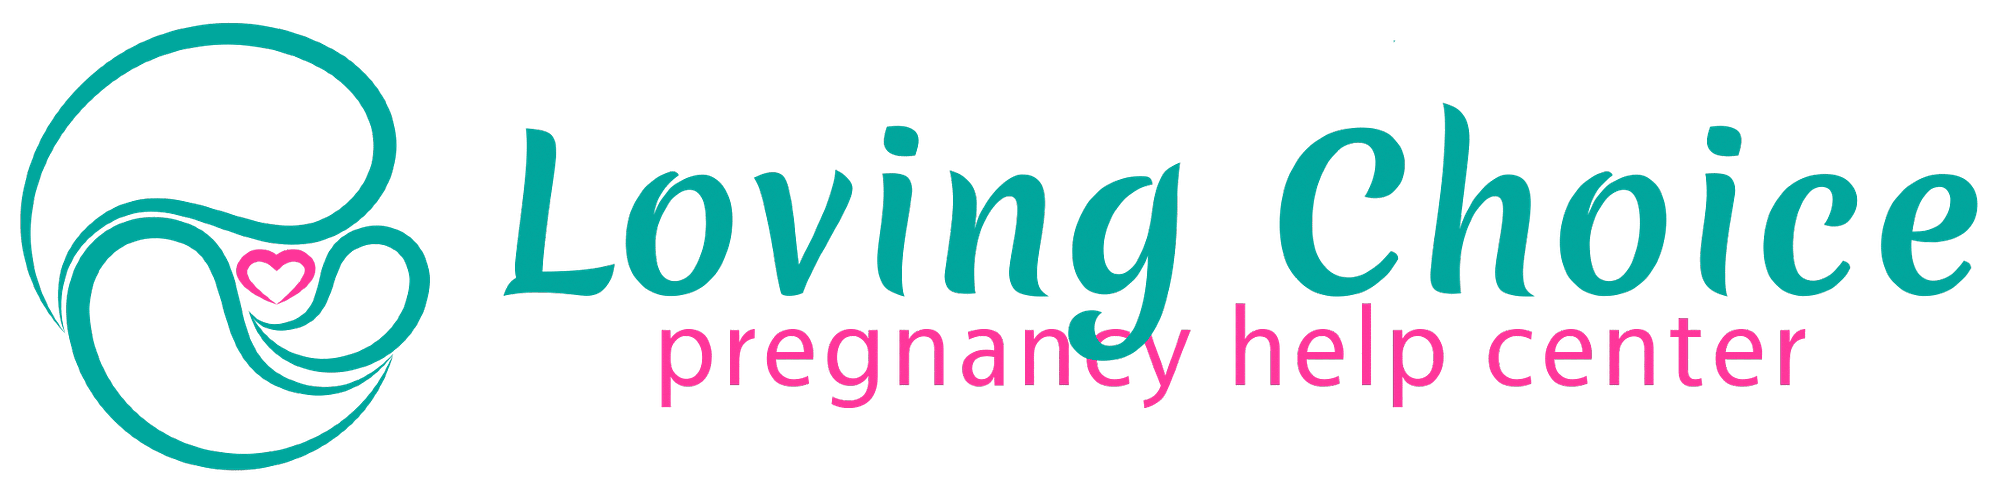 Loving Choice Pregnancy Center